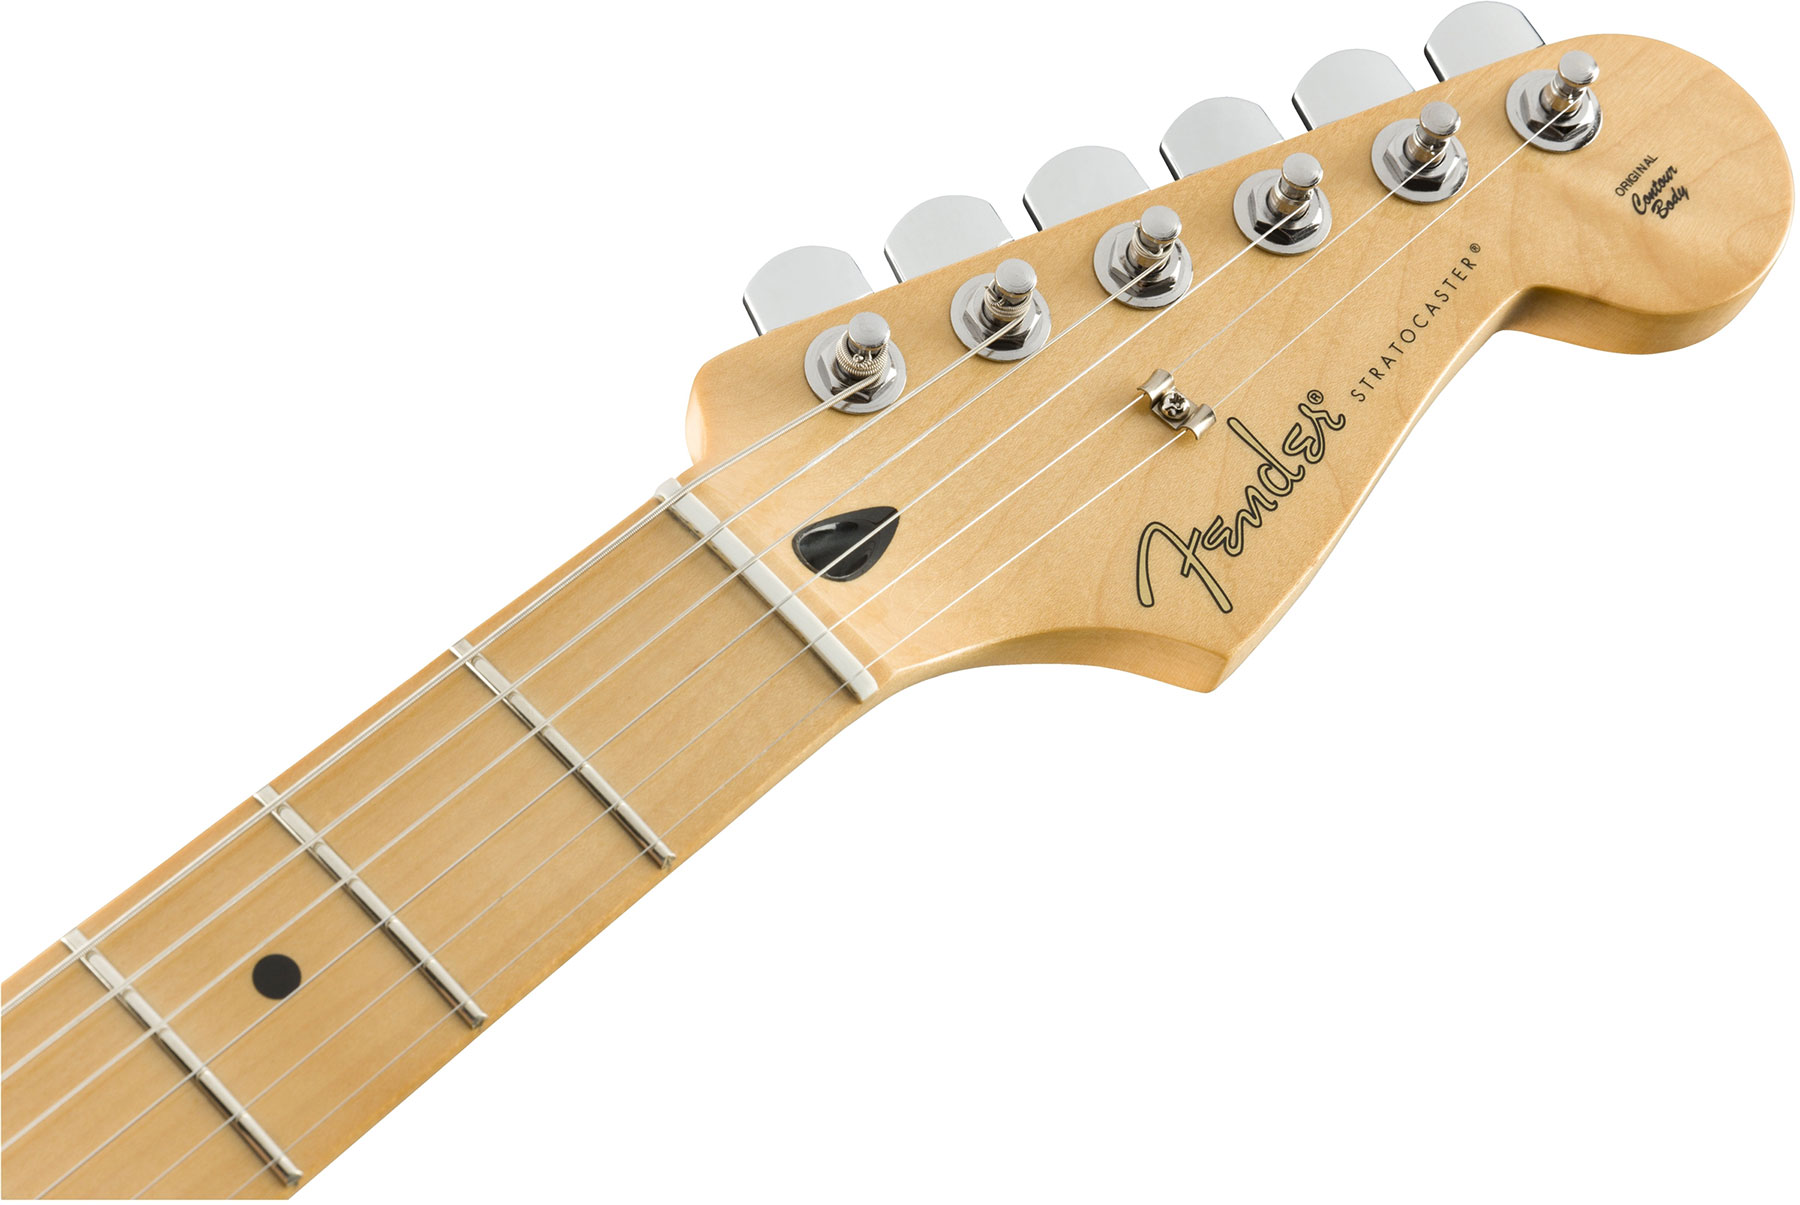 Fender Strat Player Plus Top Mex Hss Mn - Aged Cherry Burst - Str shape electric guitar - Variation 3